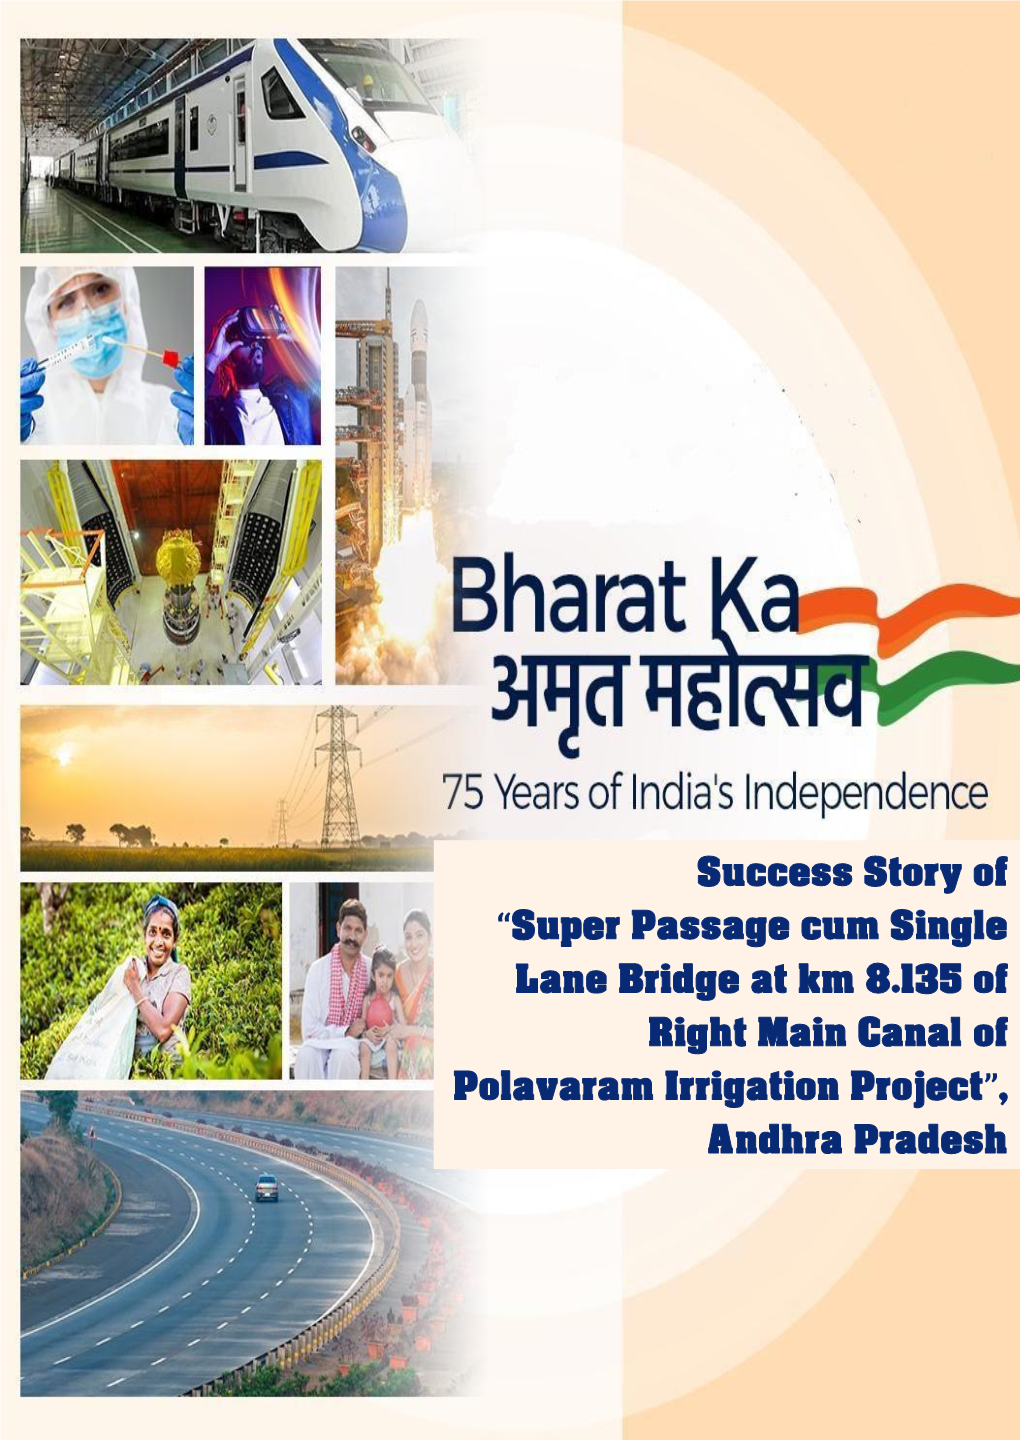 Success Story of “Super Passage Cum Single Lane Bridge at Km 8.135 of Right Main Canal of Polavaram Irrigation Project”, Andhra Pradesh